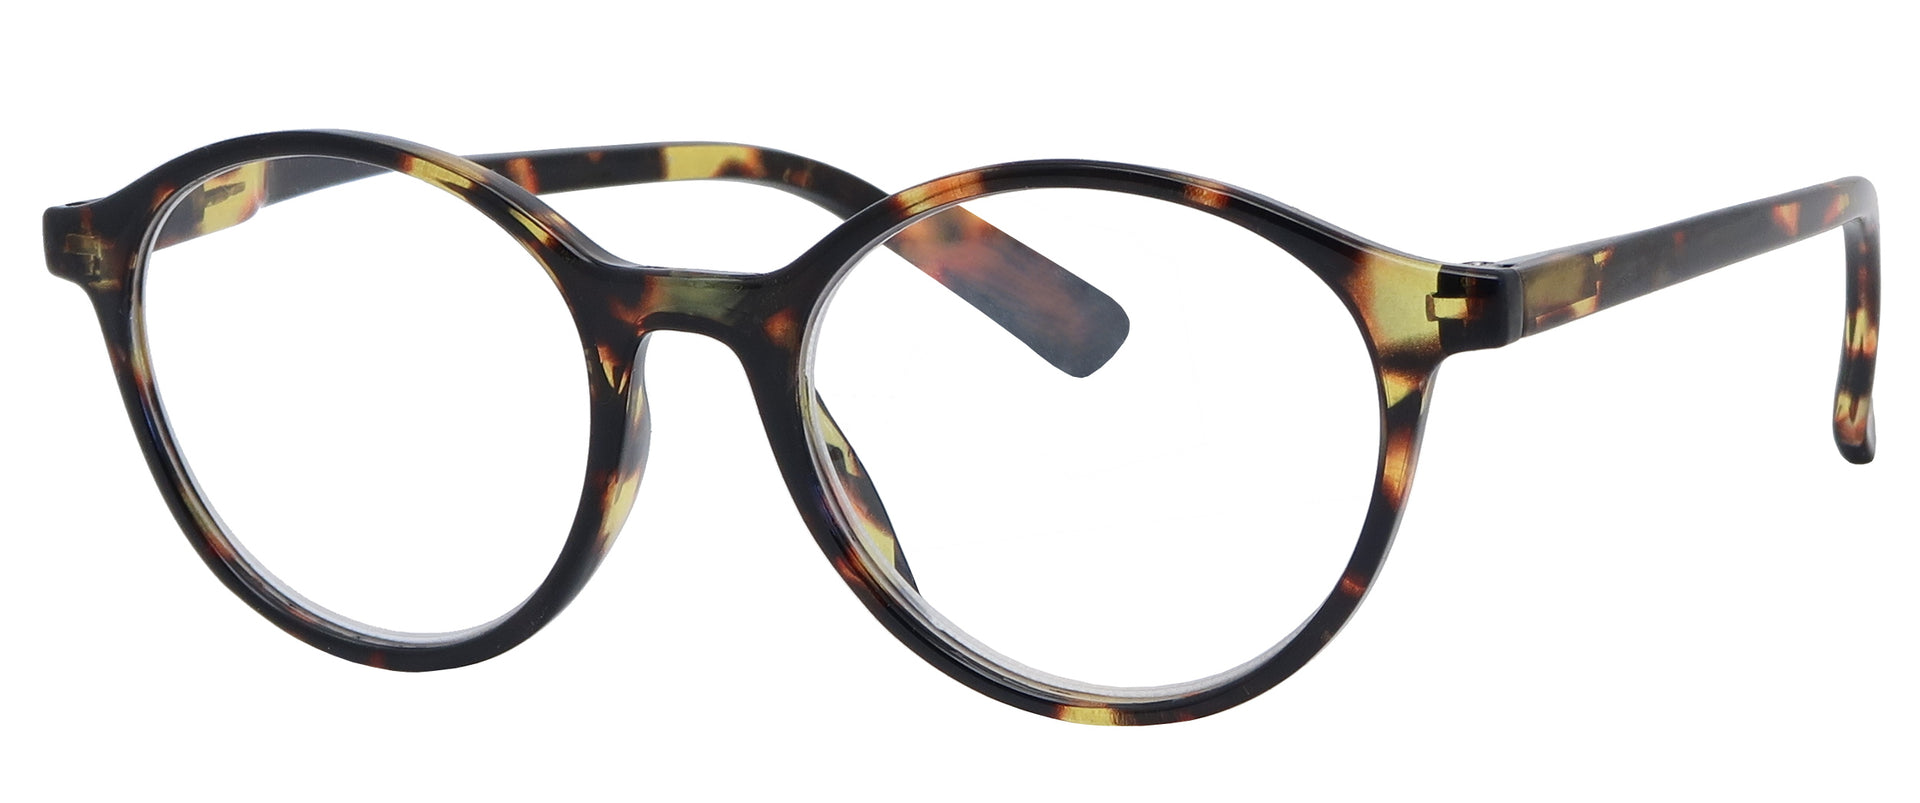 ST1504R -  Wholesale Unisex Basic Oval Style Reading Glasses in Tortoise